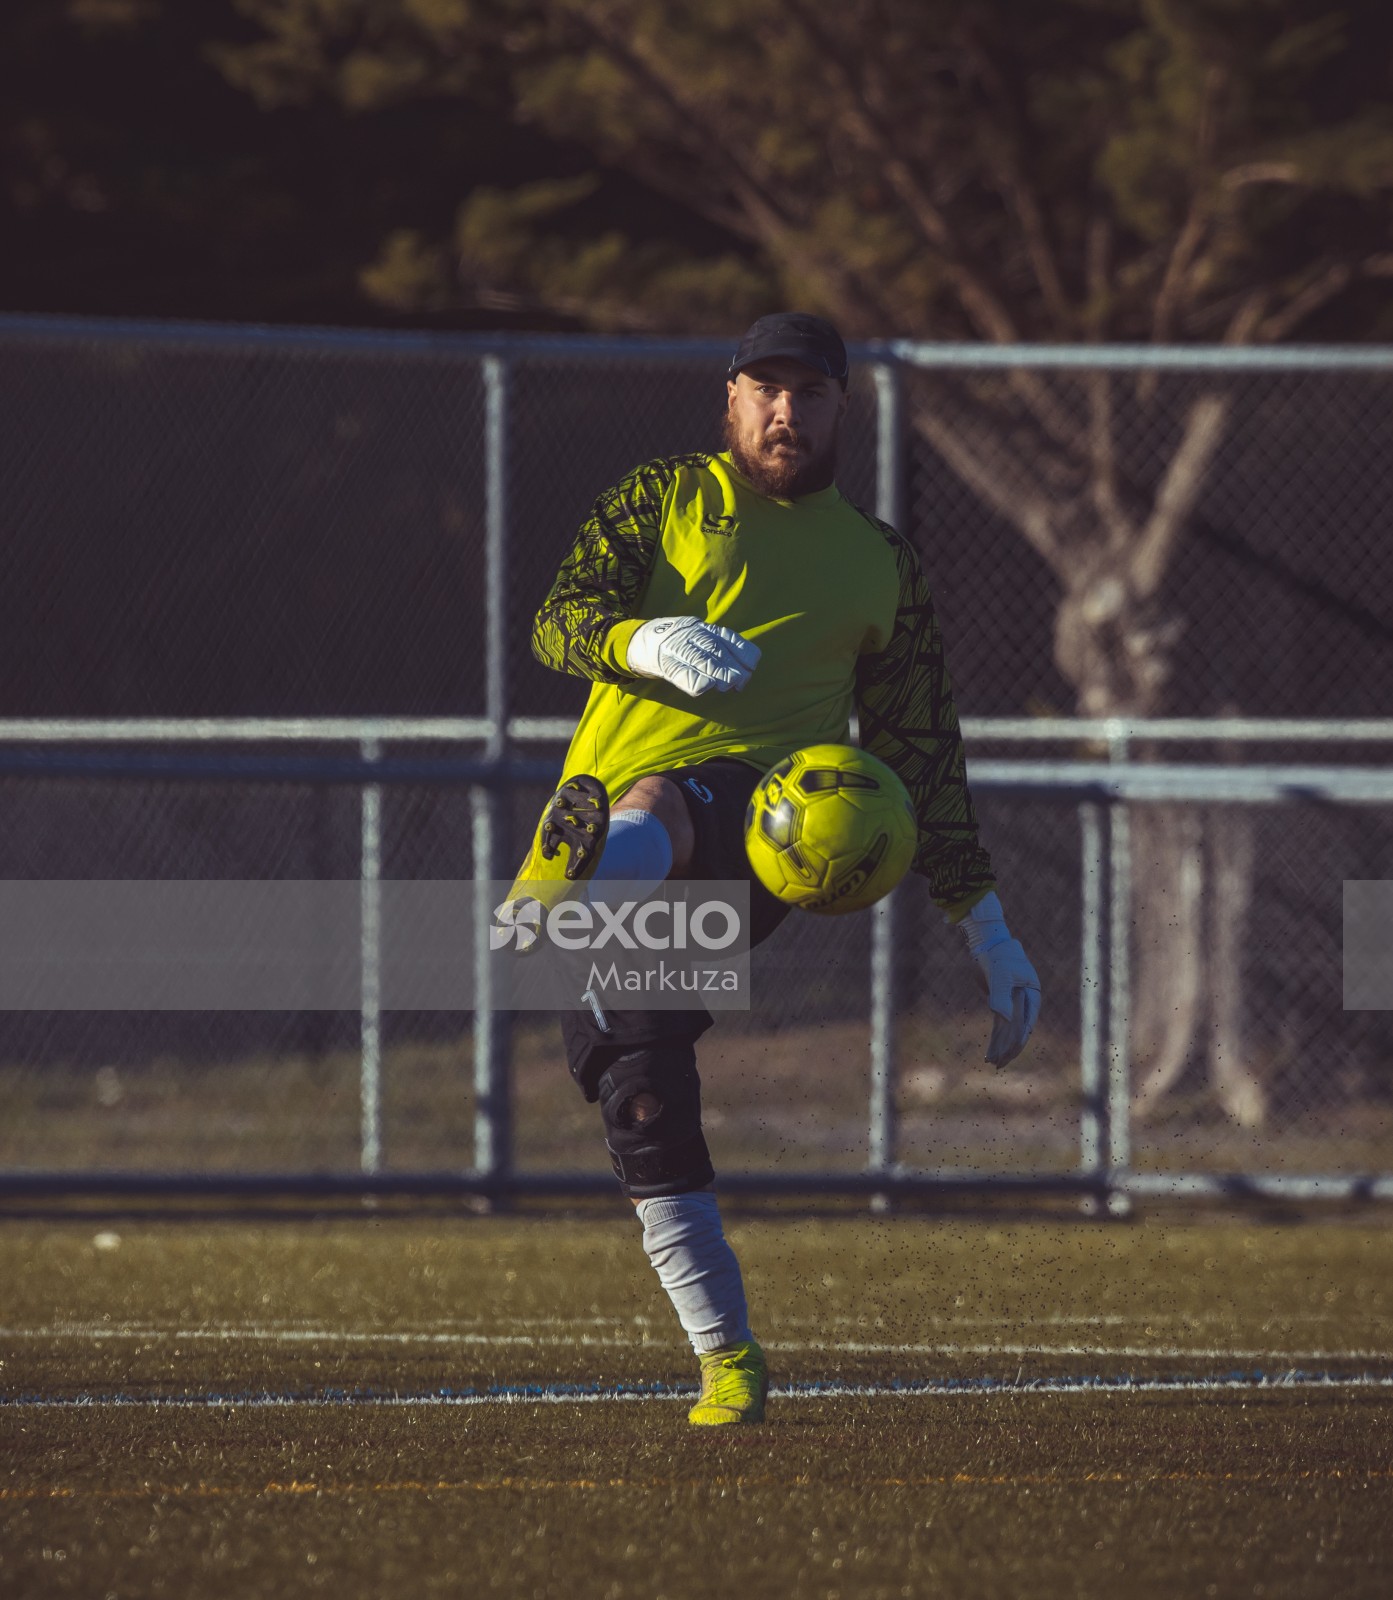 Goalkeeper kicks neon yellow football - Sports Zone sunday league